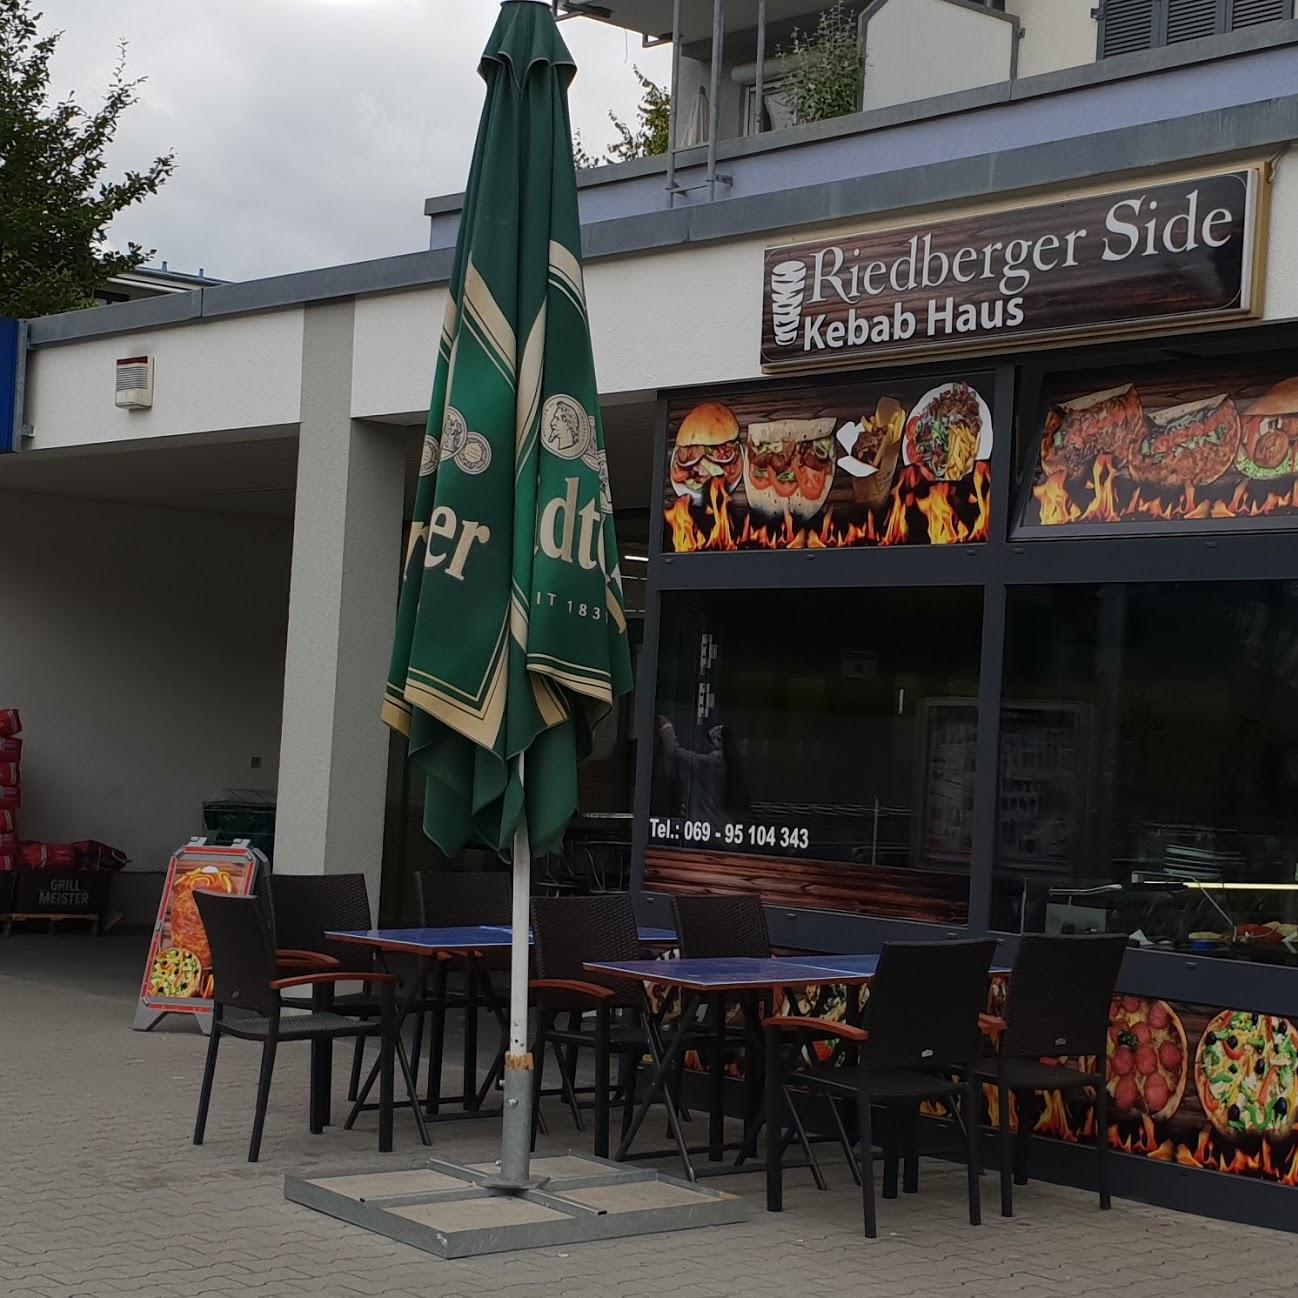 Restaurant "Riedberger Side Kebab Haus" in Frankfurt am Main